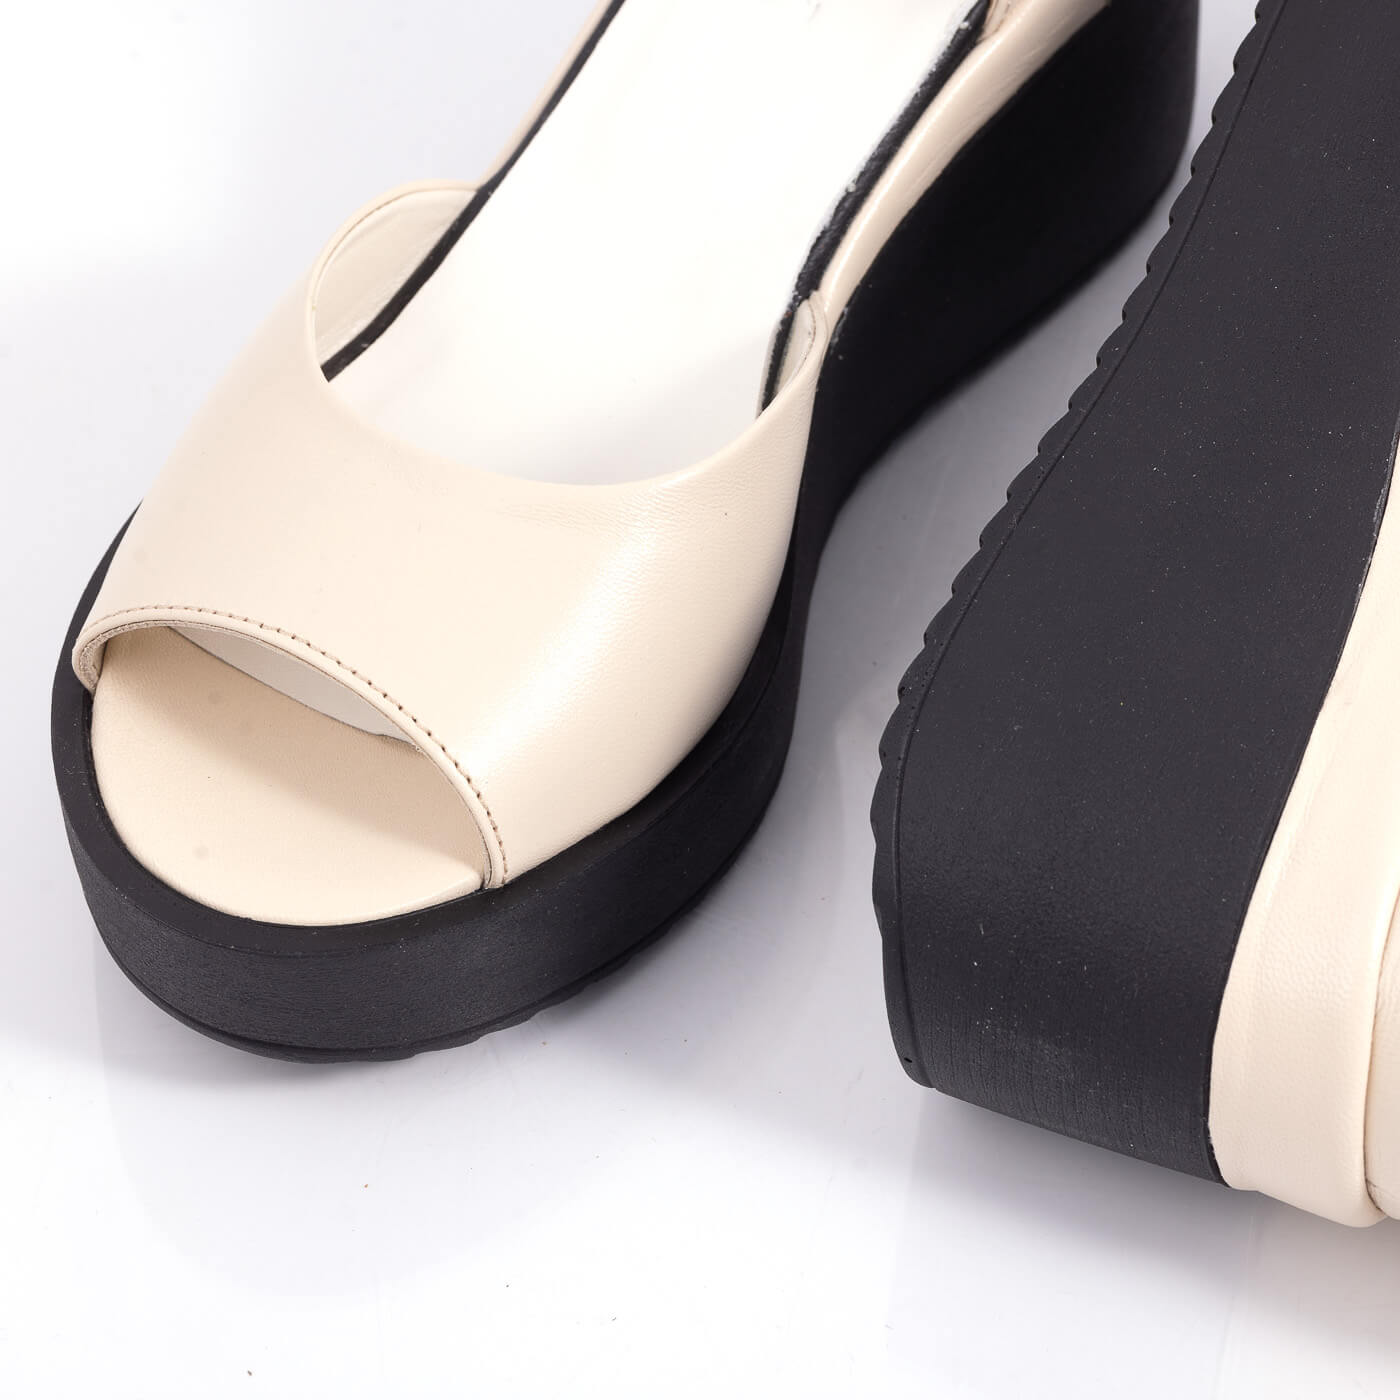 Sandale dama Brand Romanesc